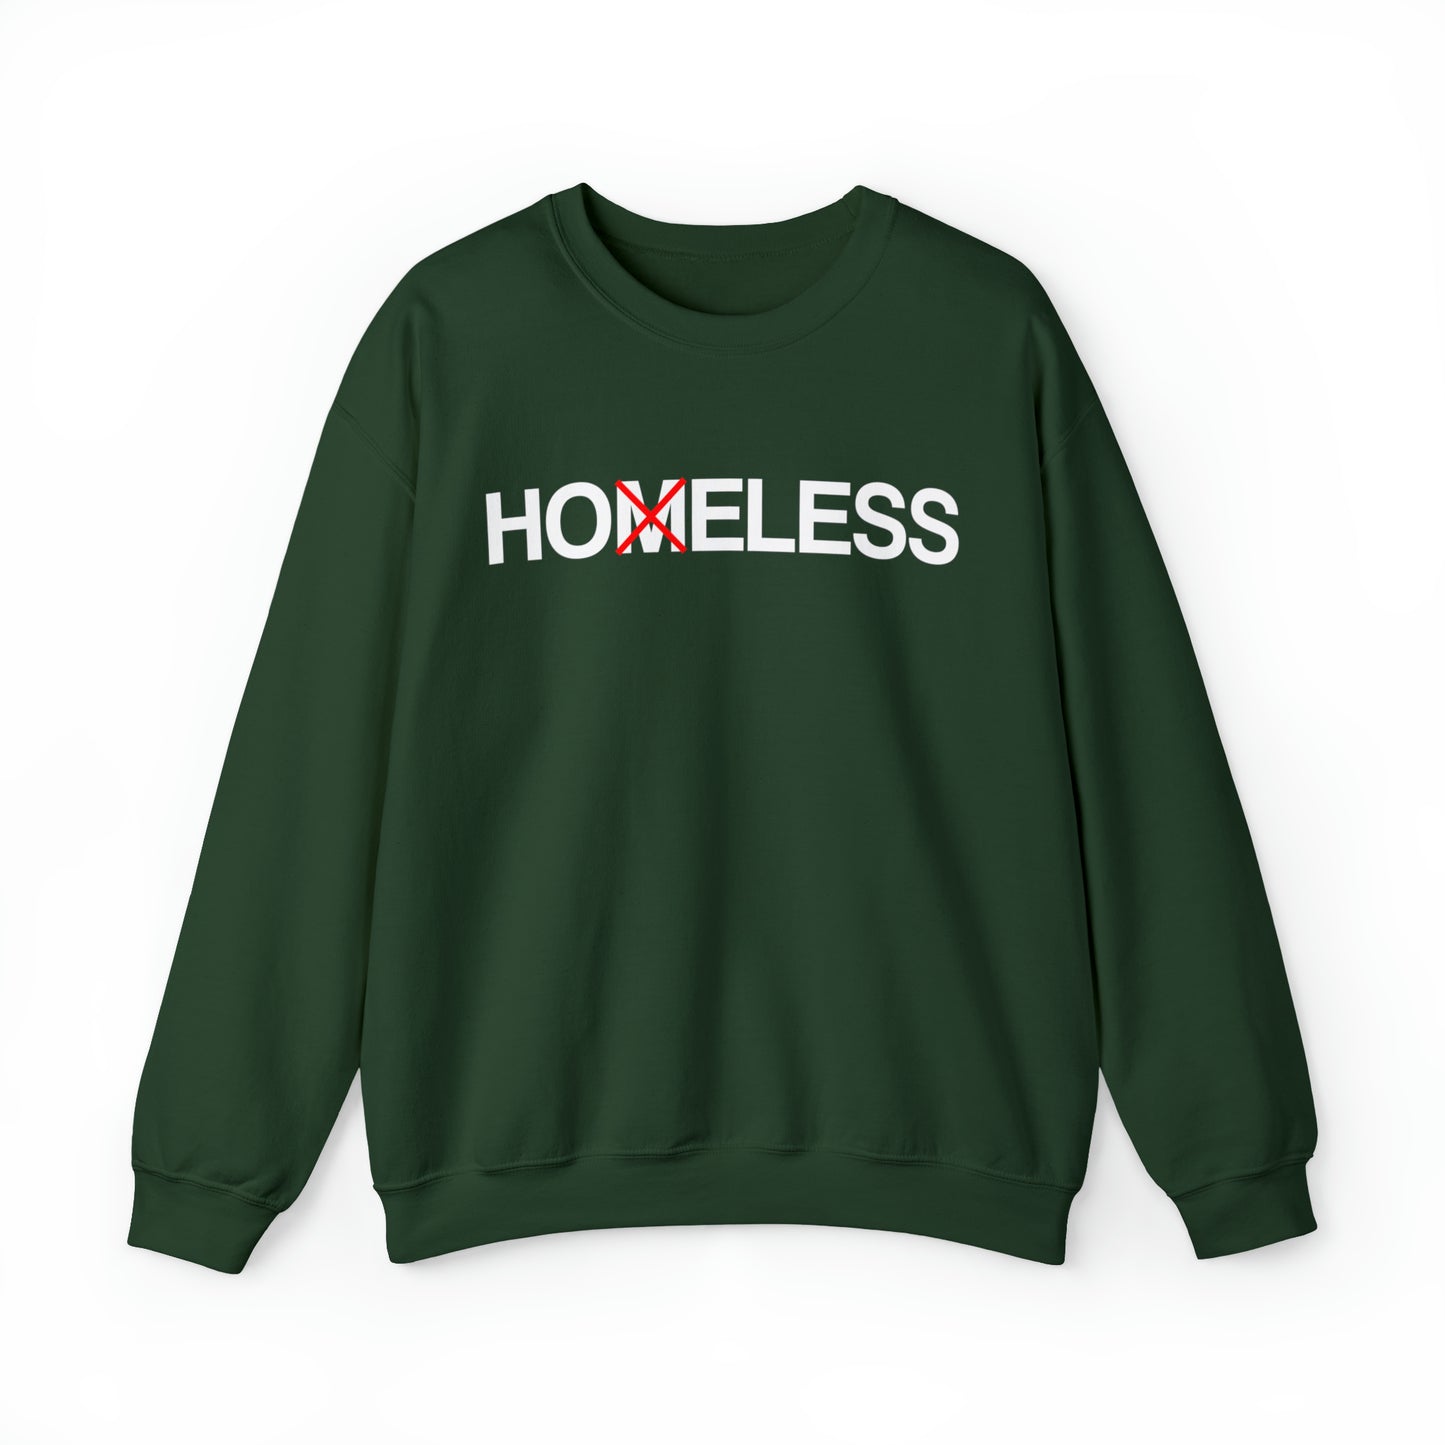 Homeless / Hoeless Crewneck